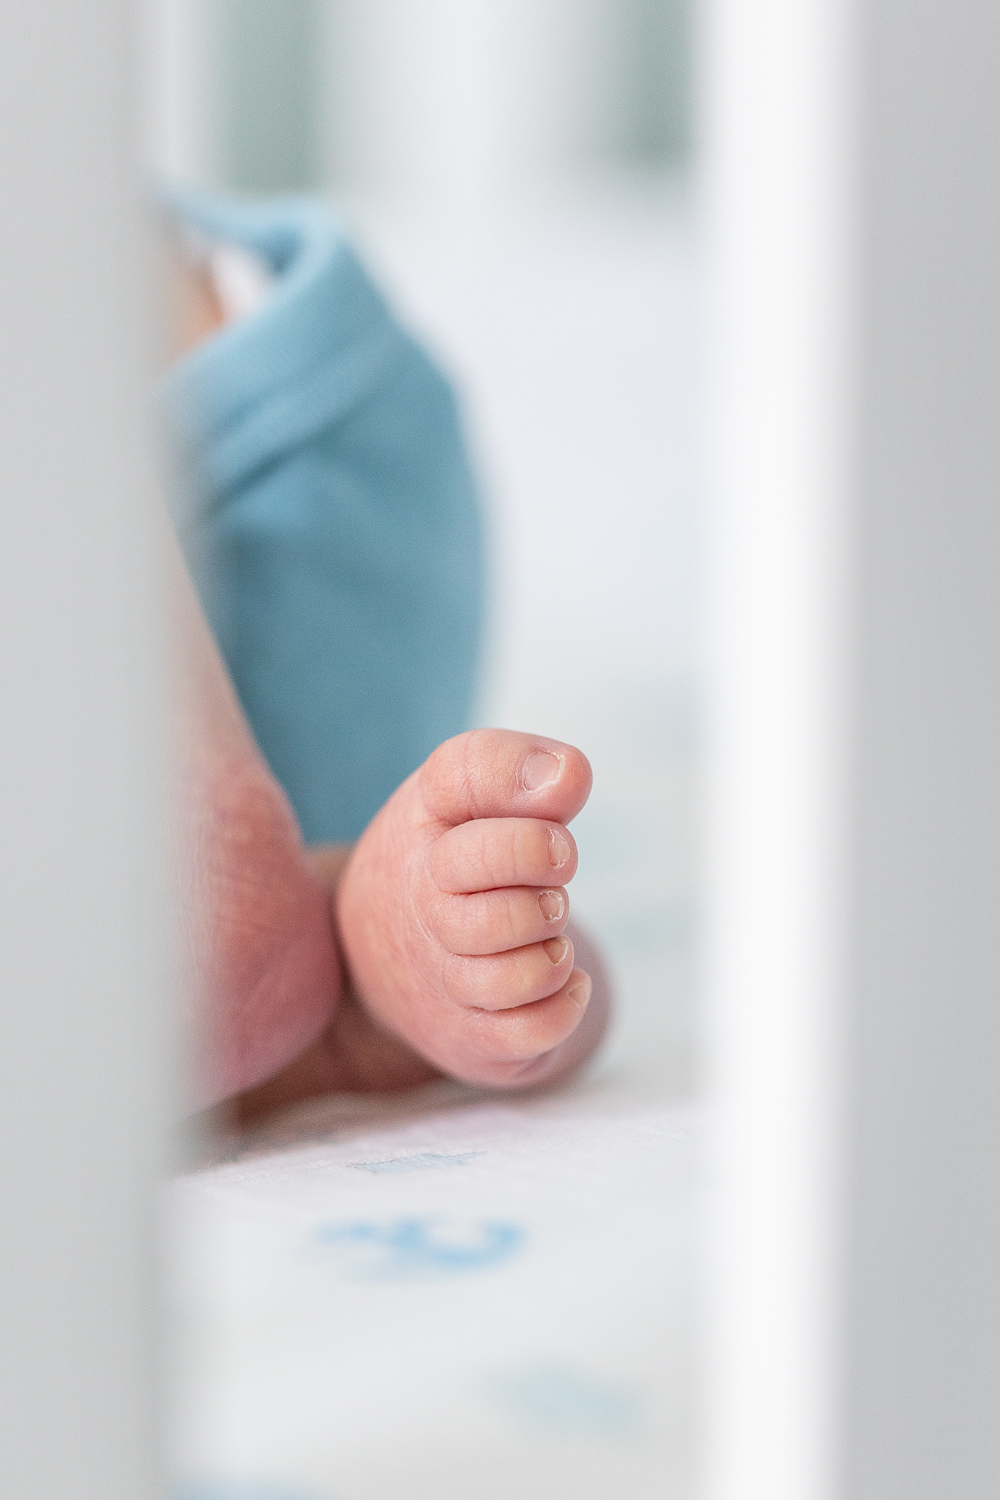 Norfolk Newborn Photographer, Newborn feet, newborn lifestyle photographer, baby in crib, baby's feet laying down in crib